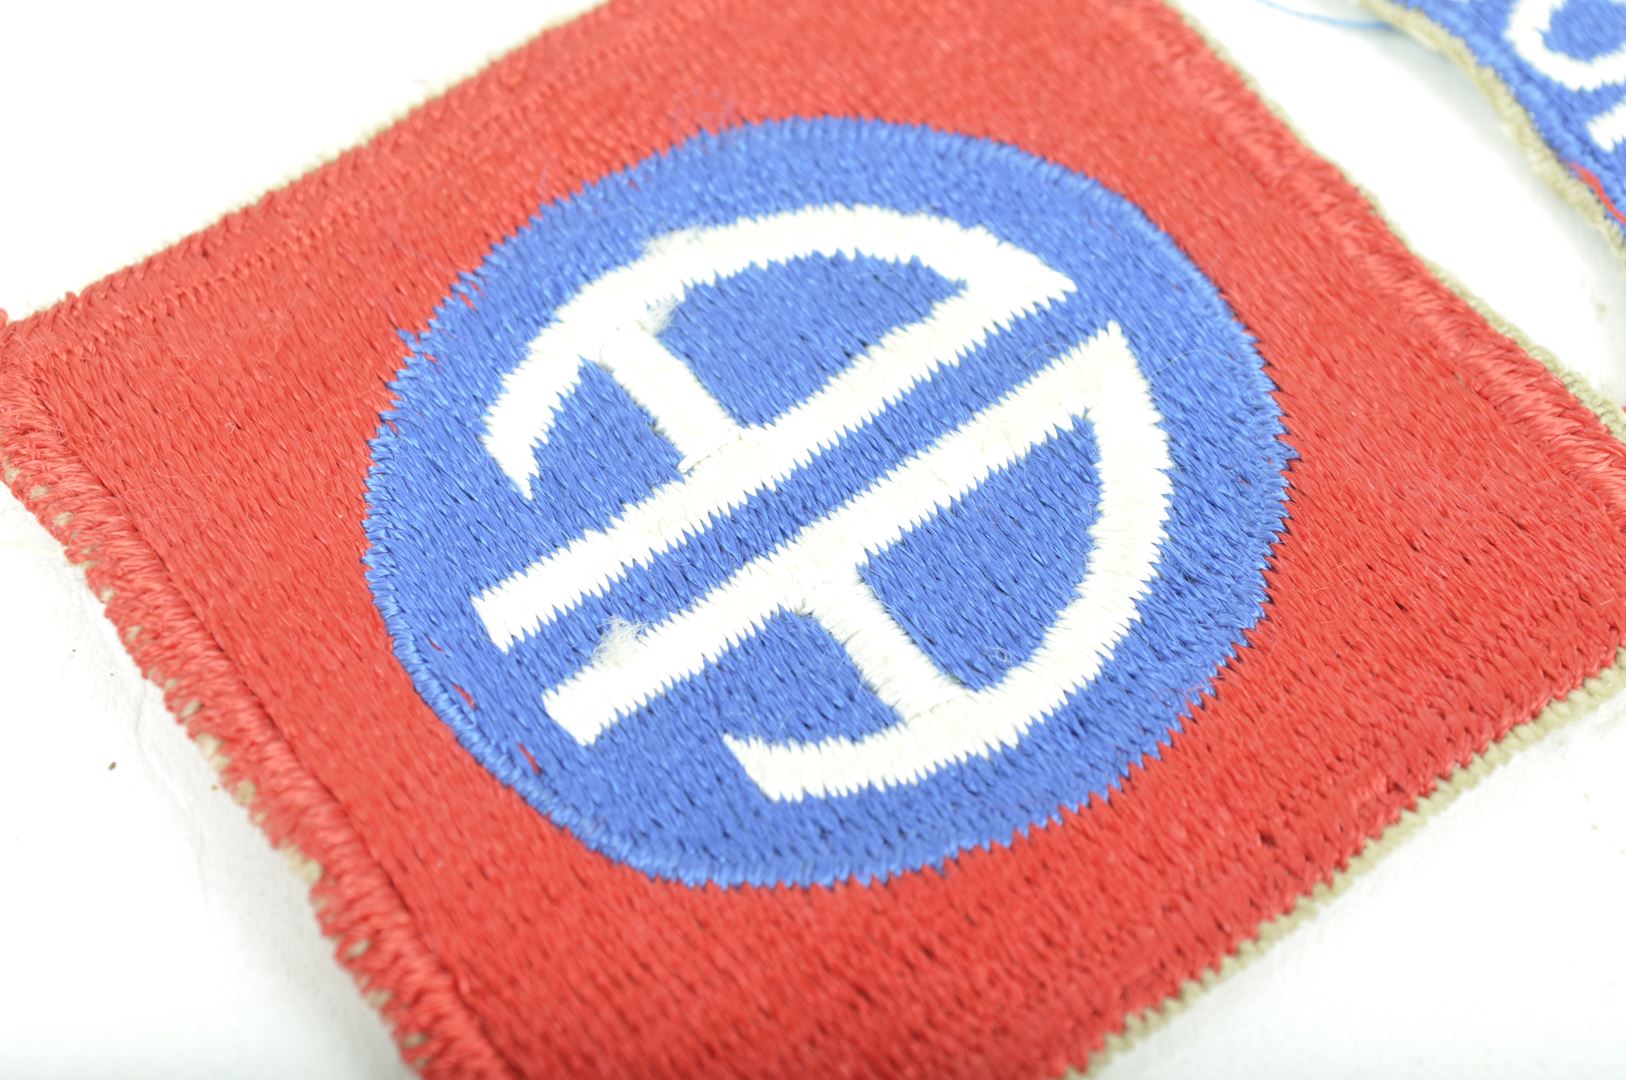 Insigne 82nd Airborne Division